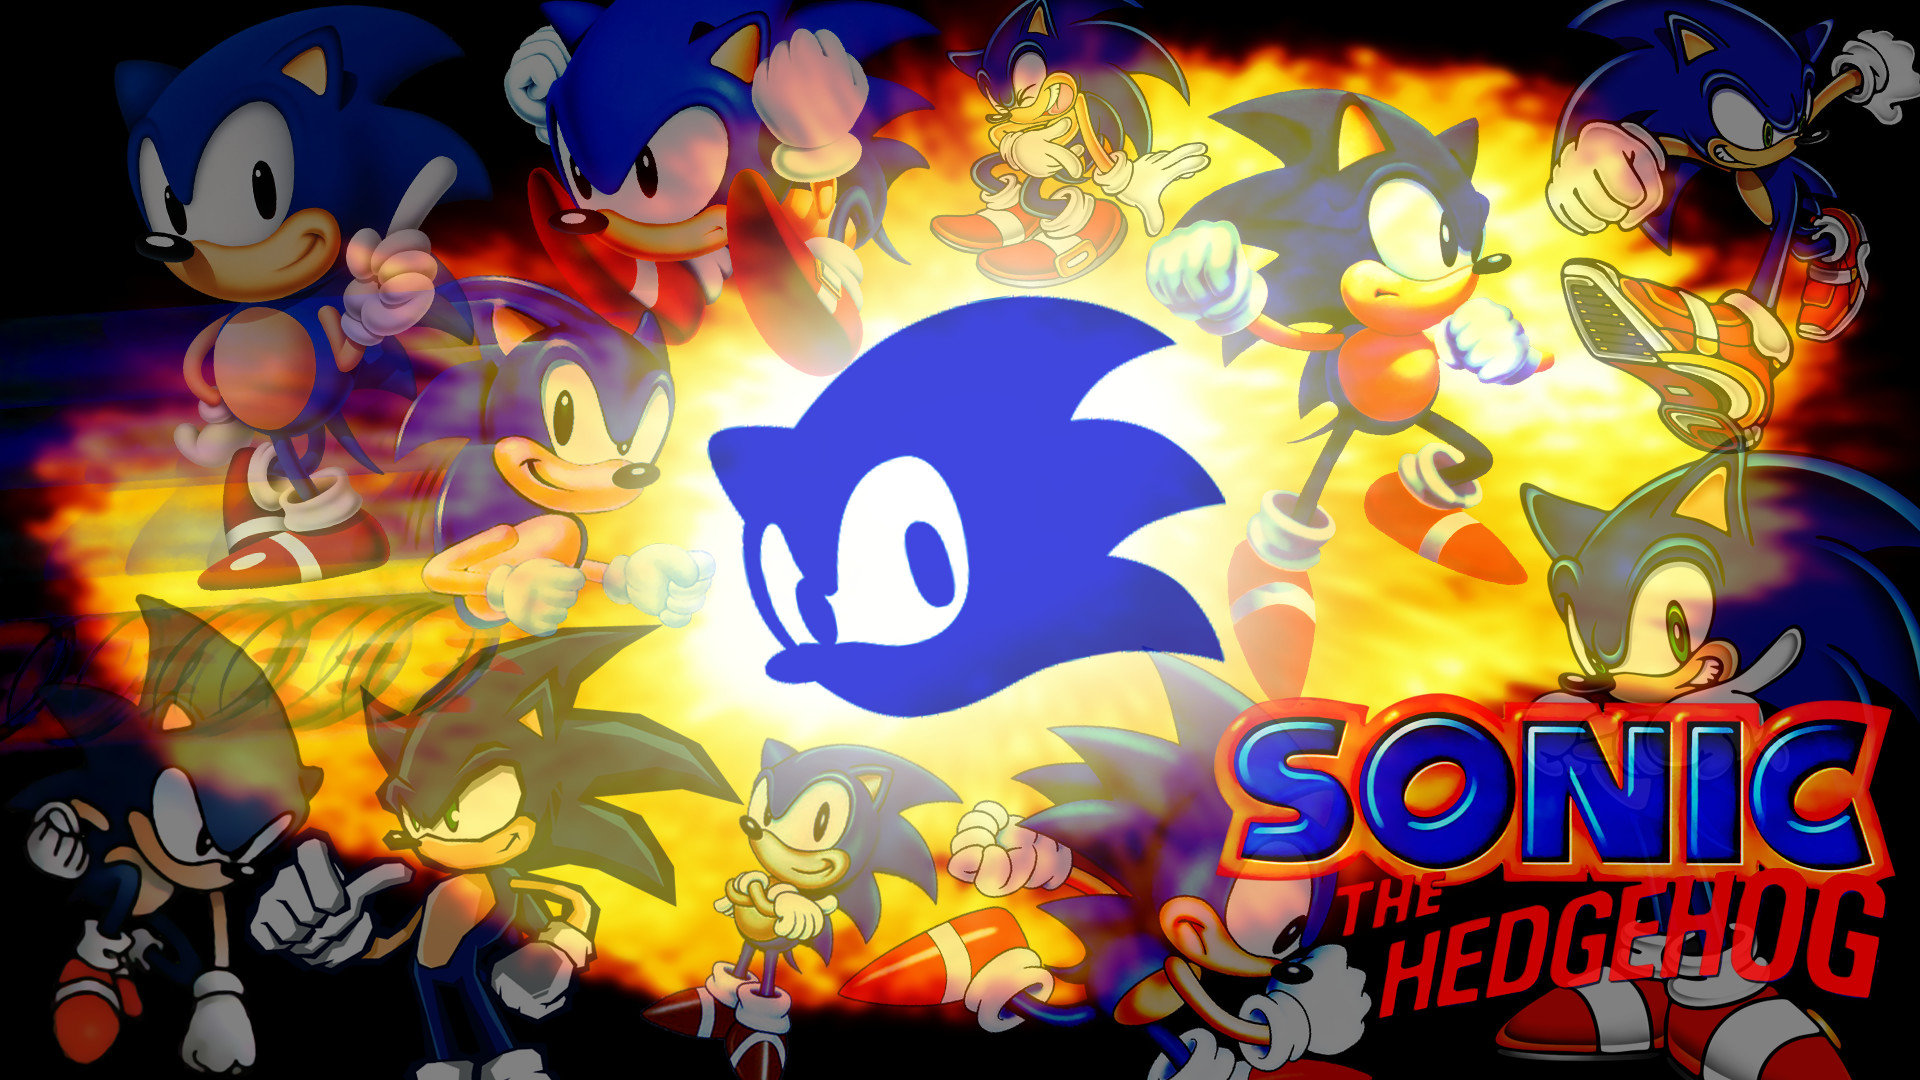 Sonic The Hedgehog Wallpapers 1920x1080 Full Hd 1080p Desktop Backgrounds